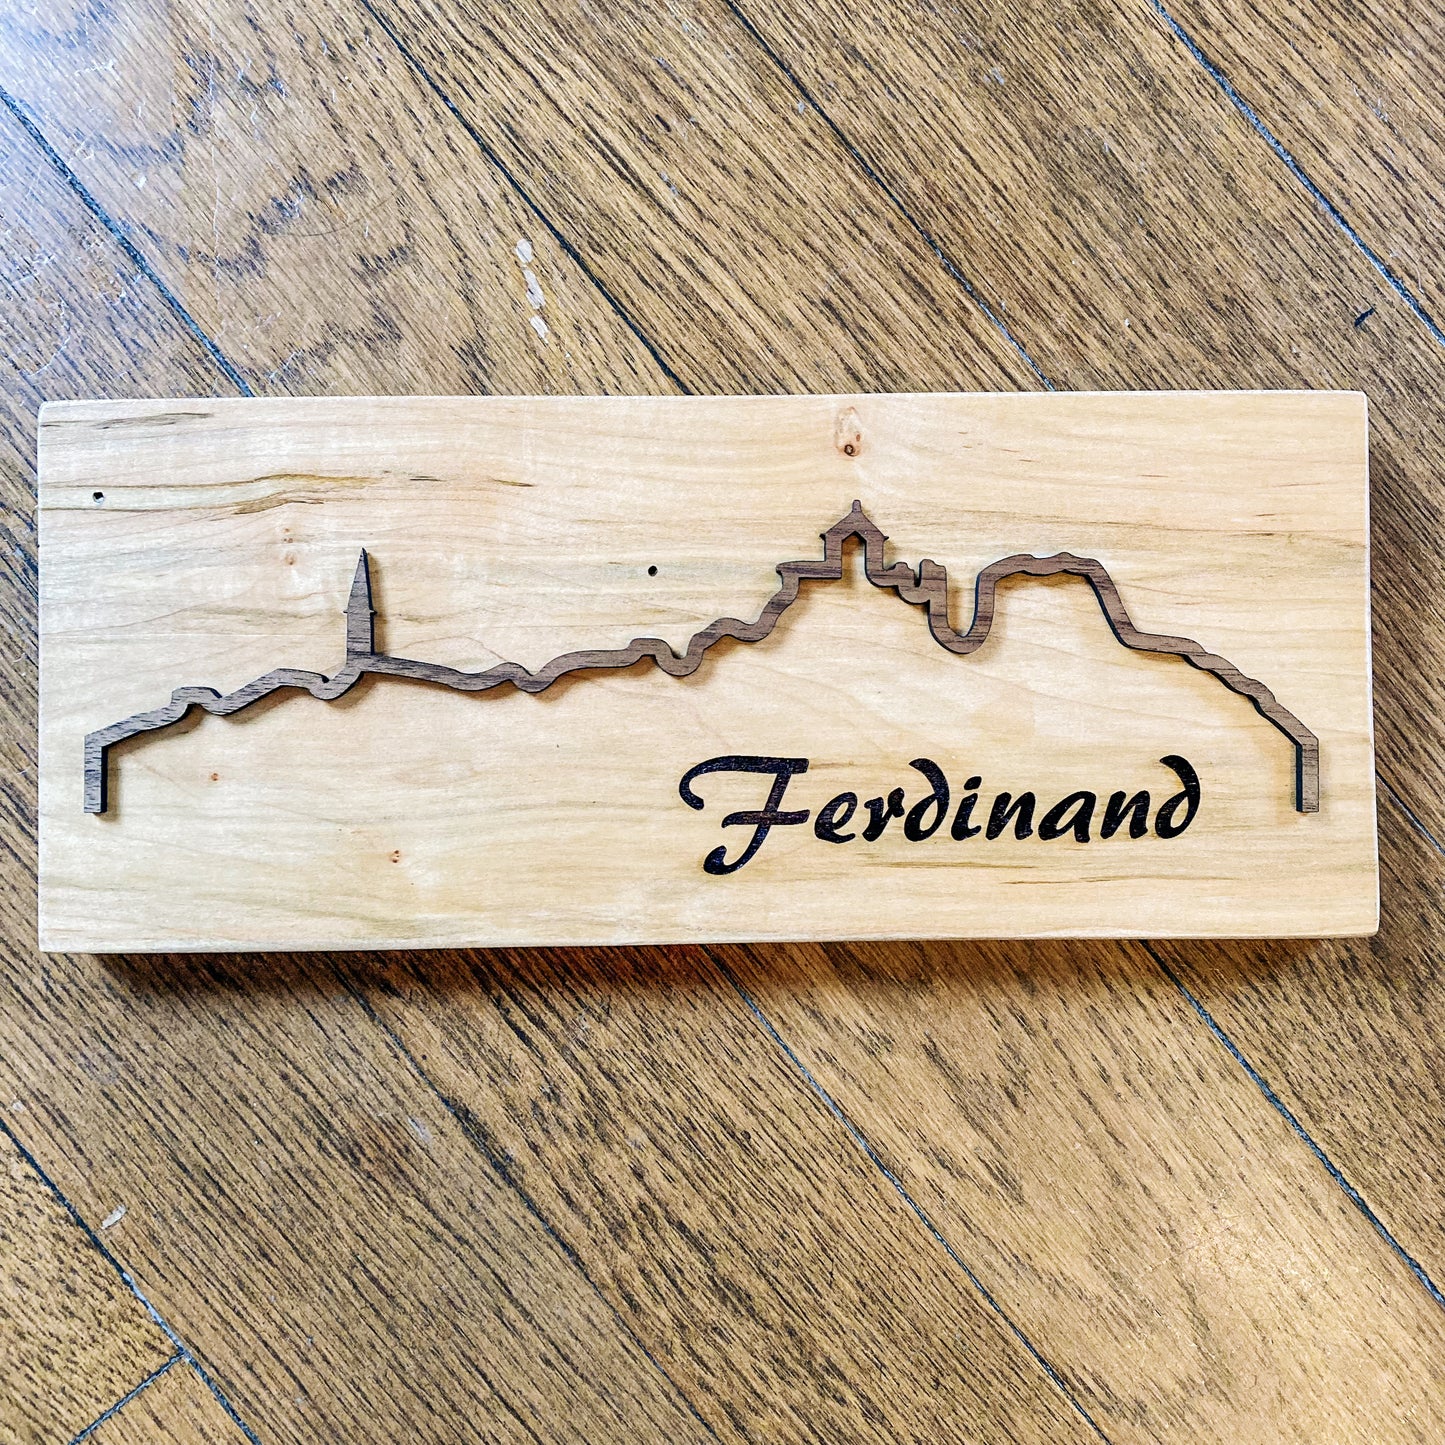 Ferdinand City Sign